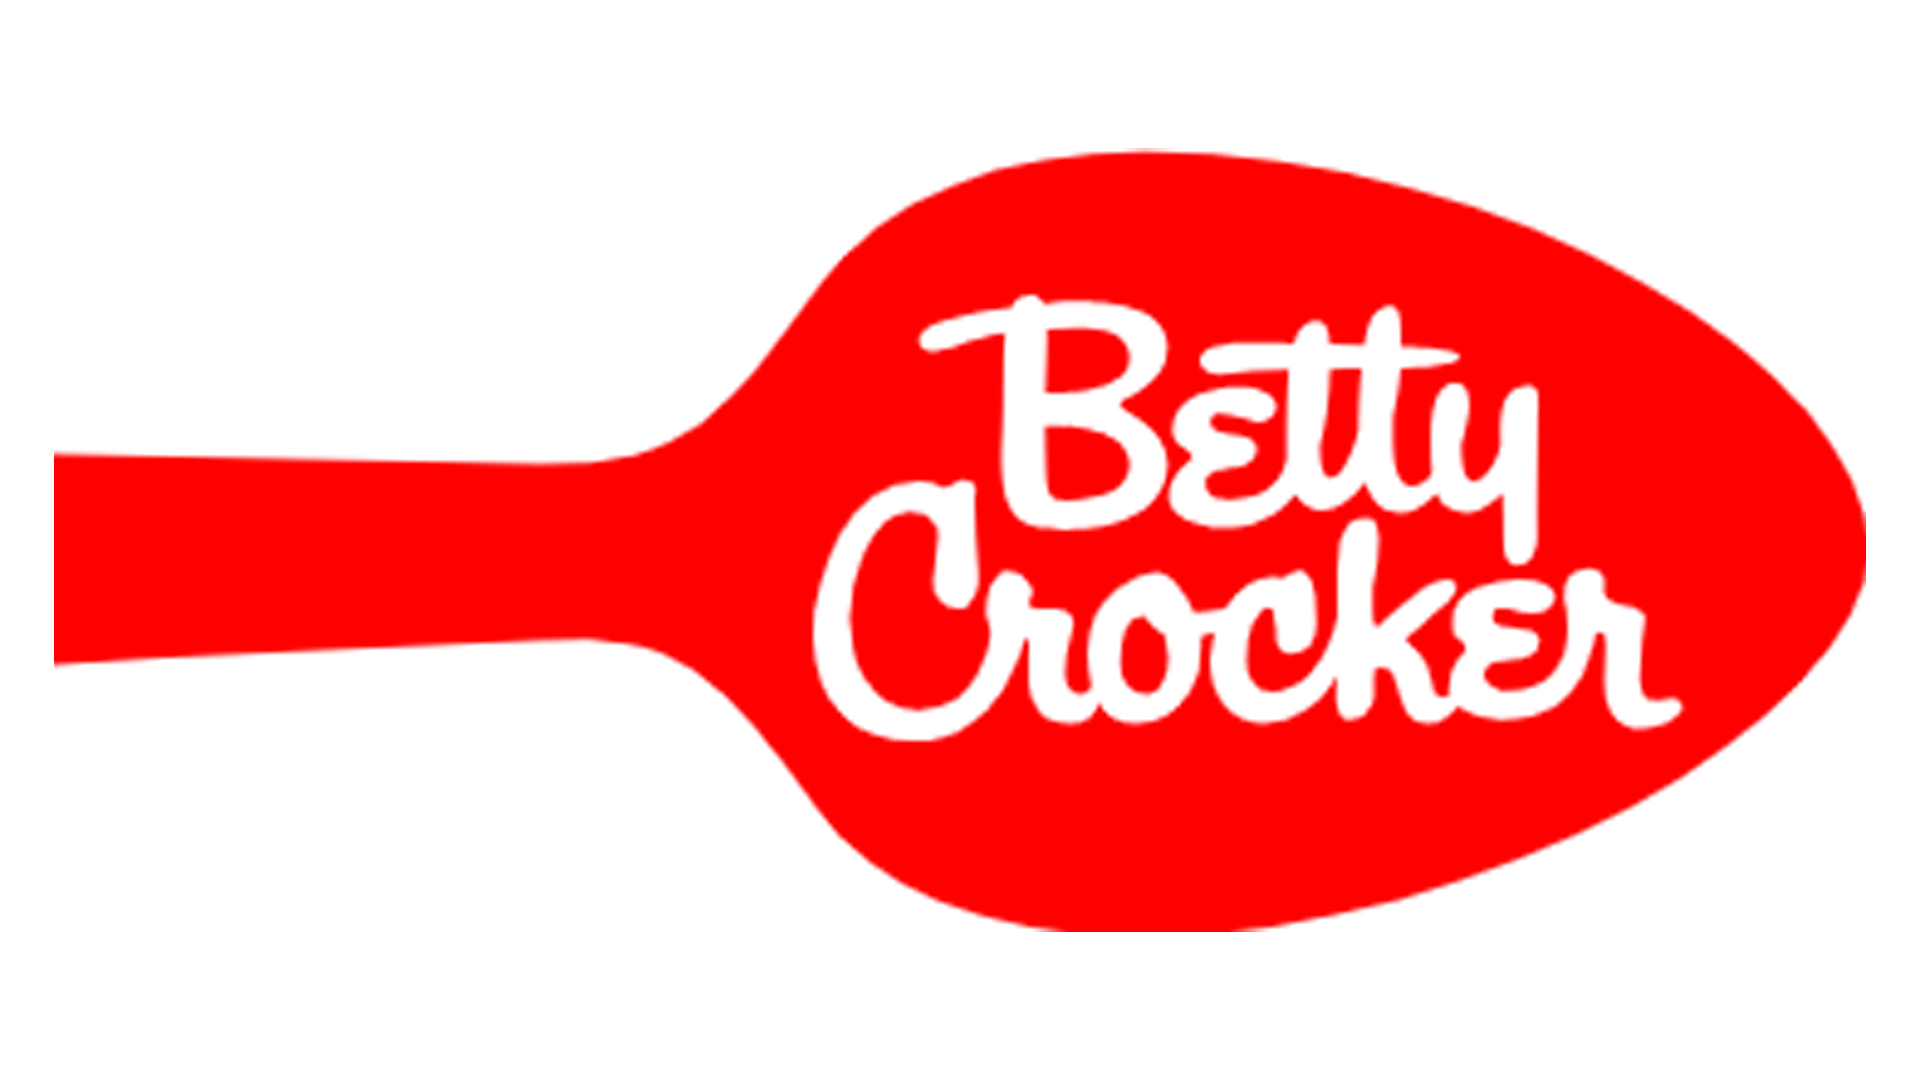 Marque: BETTY CROCKER